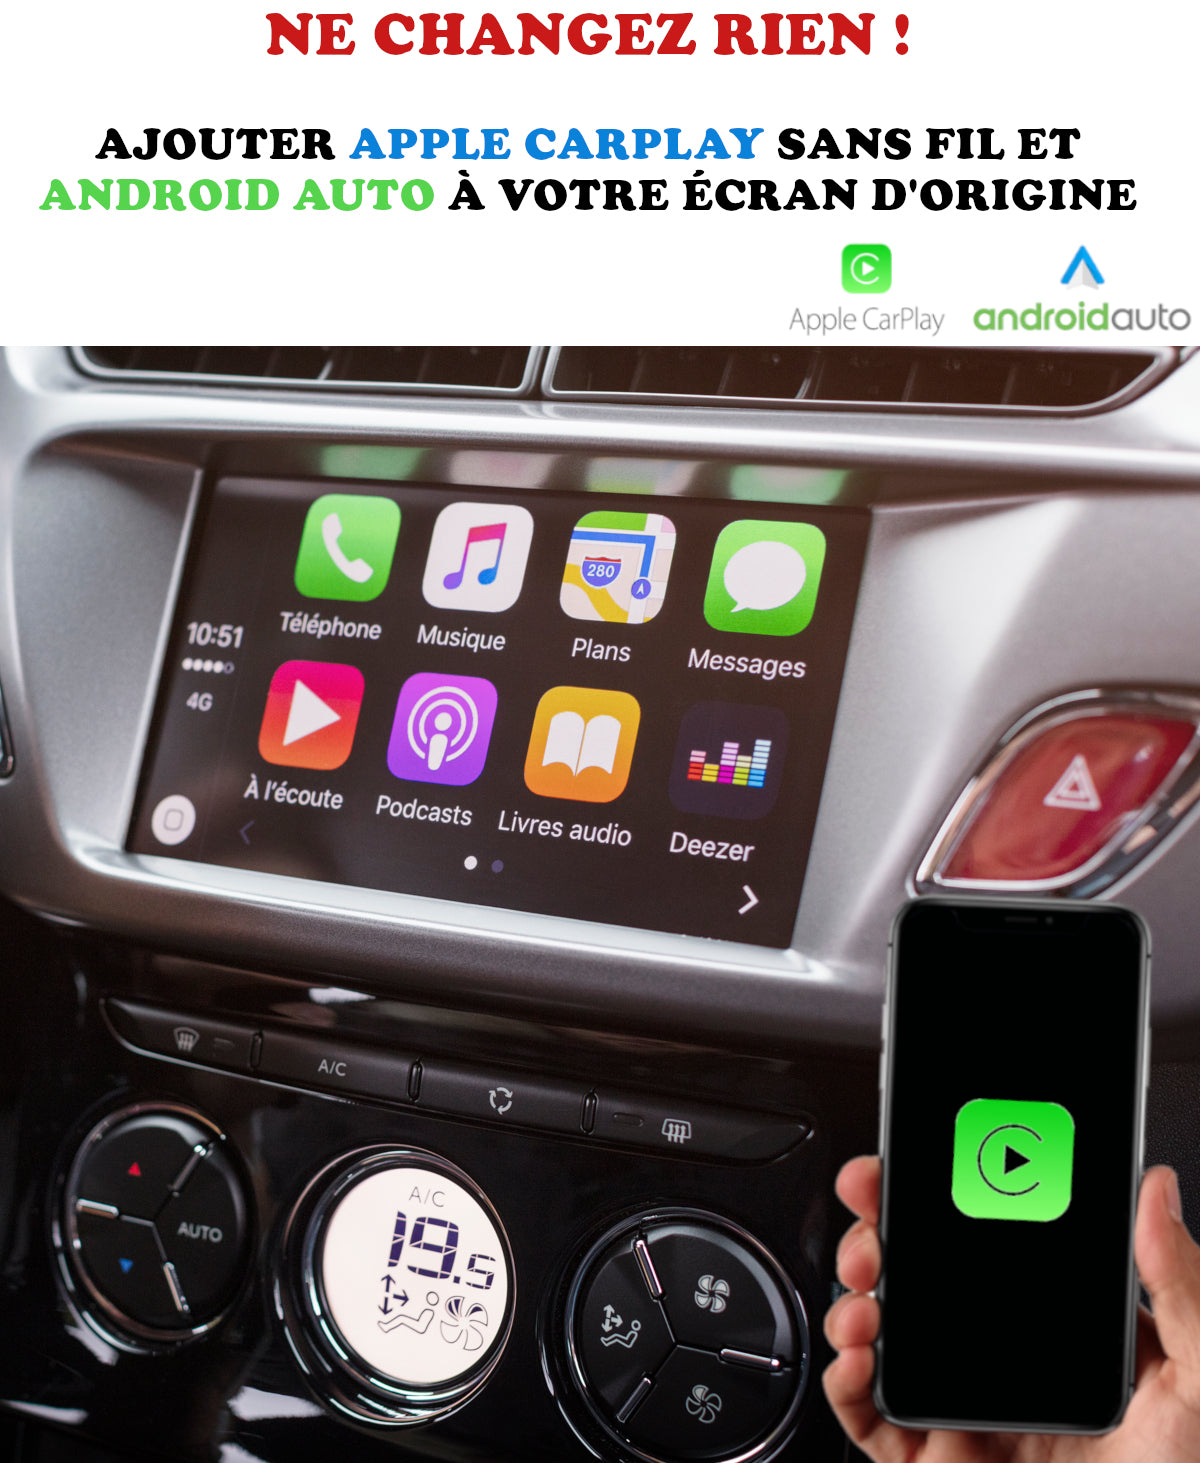 Apple car play autoradio voiture android sans fil - Équipement auto